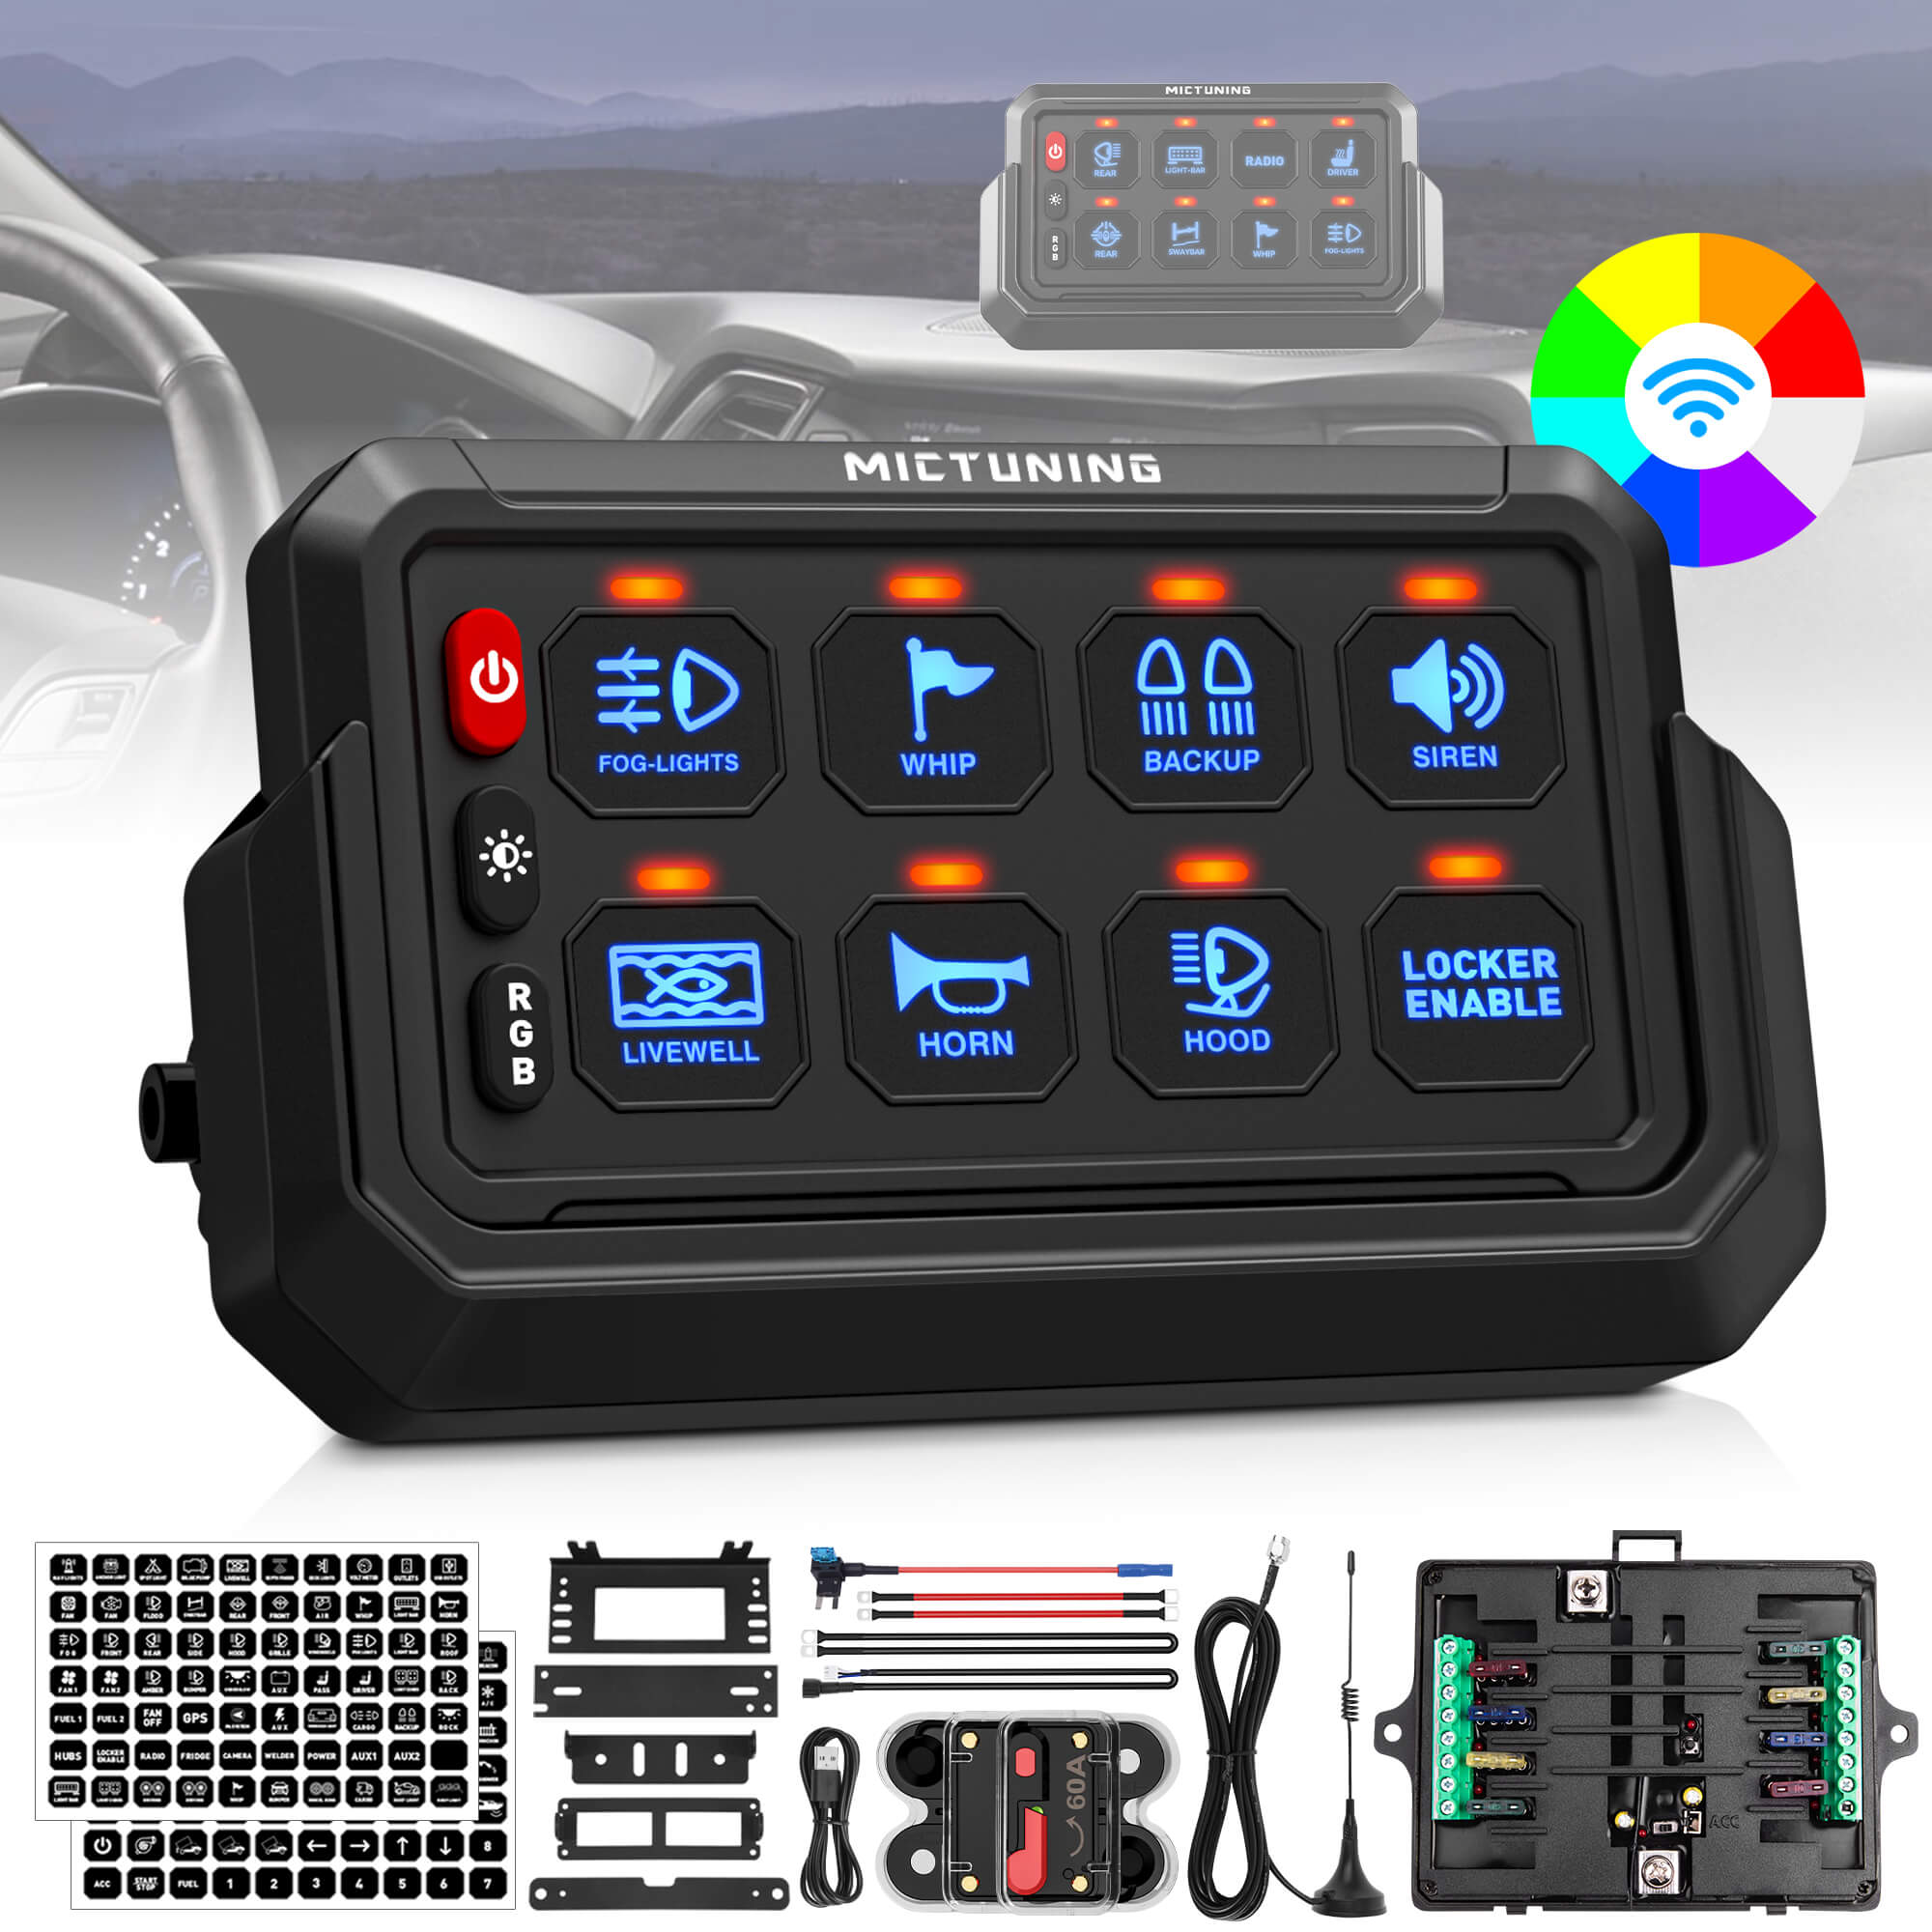 Wireless Cordless 8/12 Gang RGB Switch Panel P1s-AC, Adjustable RGB Colors Brightness, Multifunction Switch